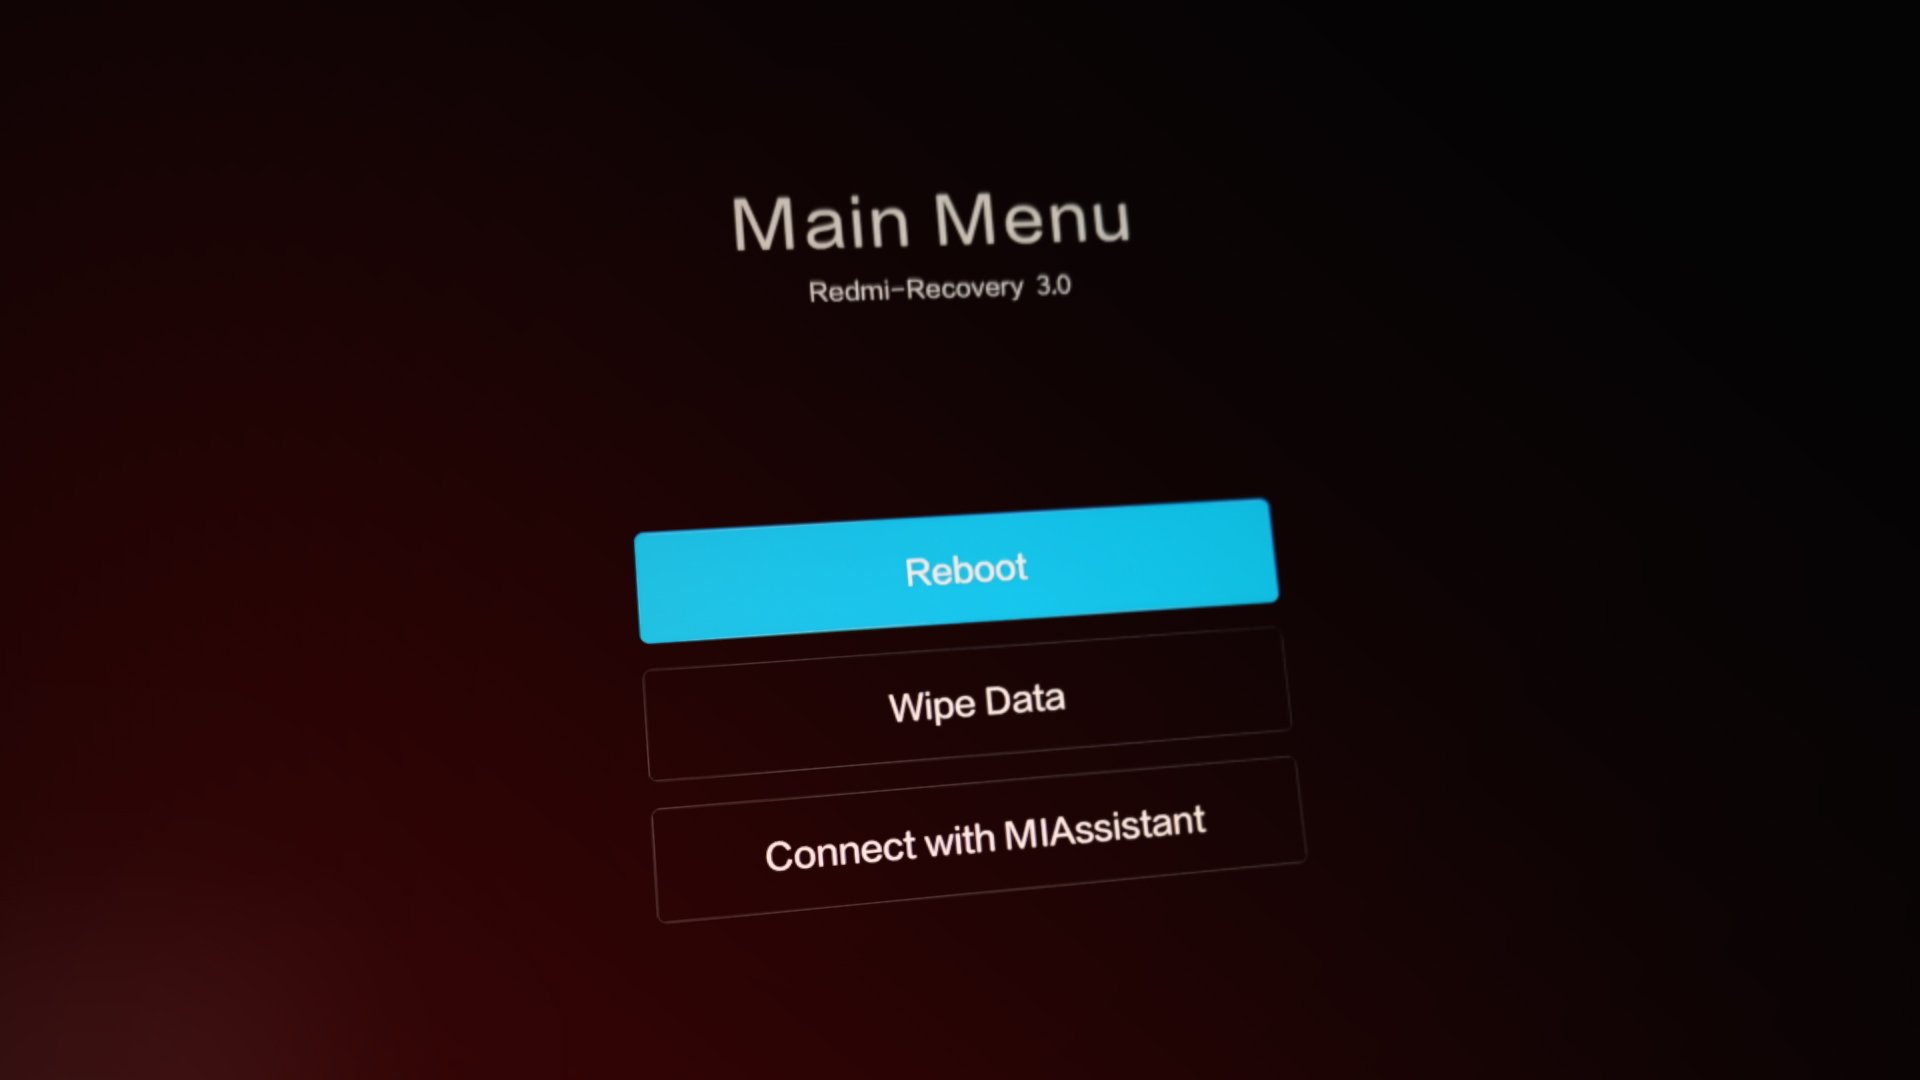 Miui recovery 5.0 miassistant main menu. Connect with miassistant Xiaomi что это. Reboot wipe data Xiaomi что делать. Mi 9 t Recovery.